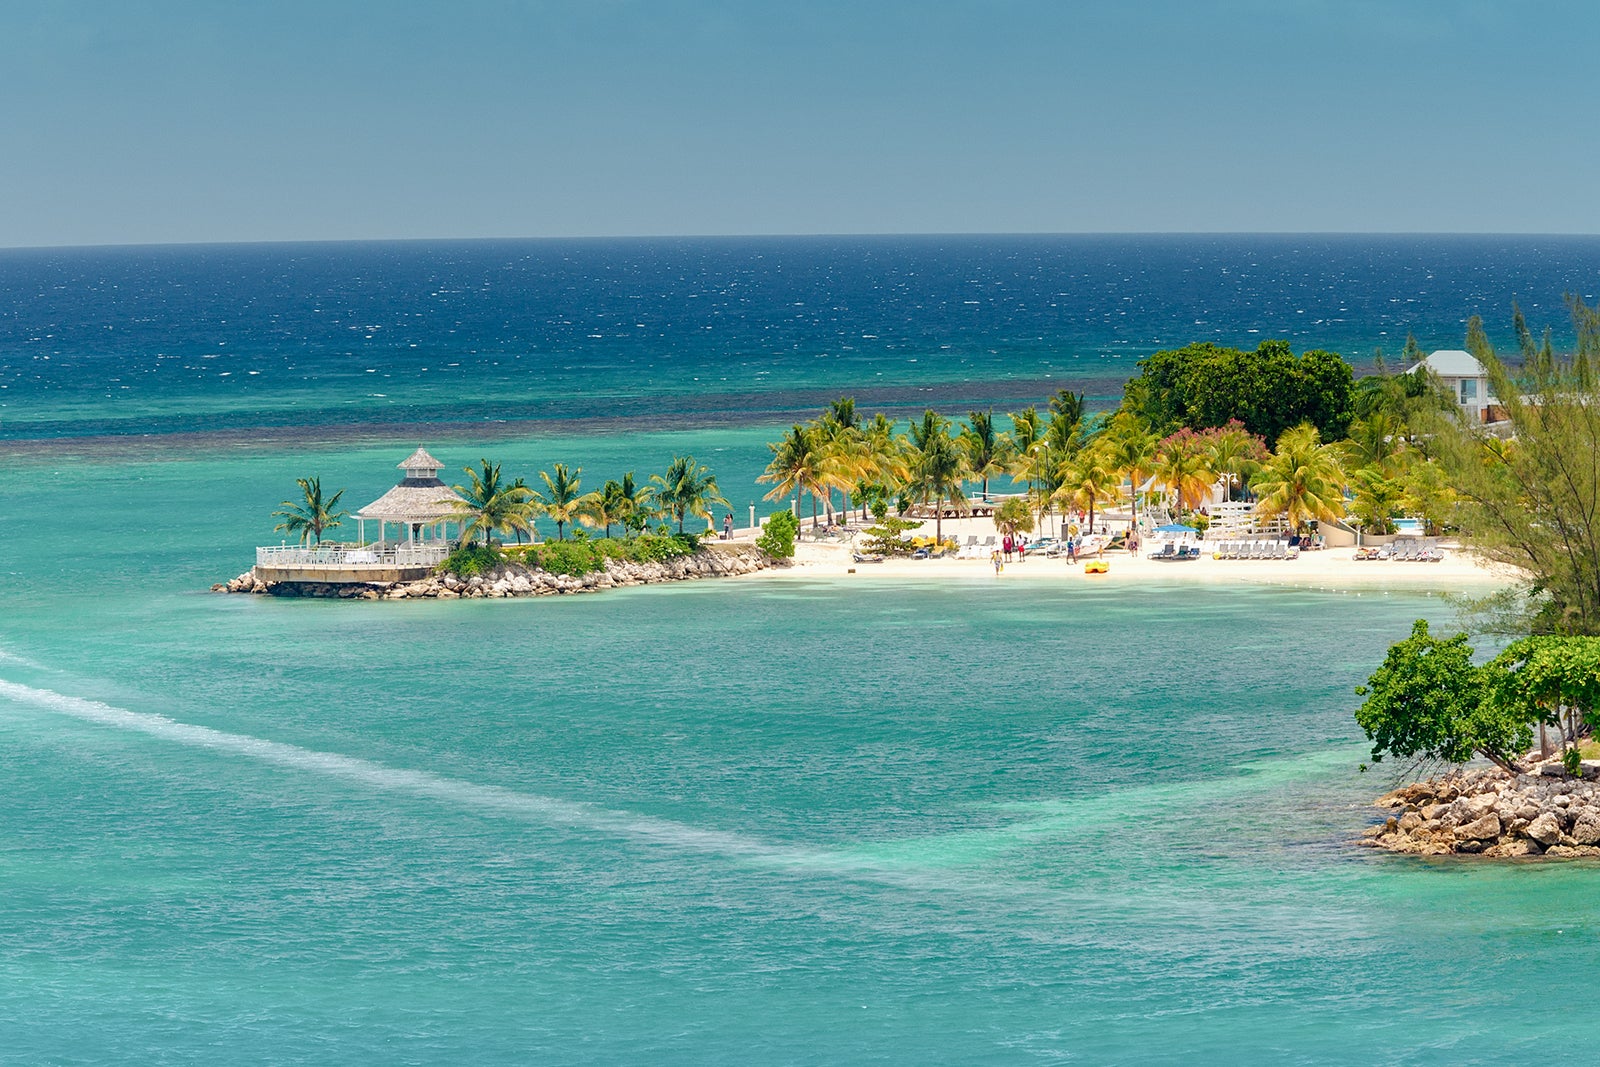 The island of Ocho Rios, Jamaica in the Caribbean